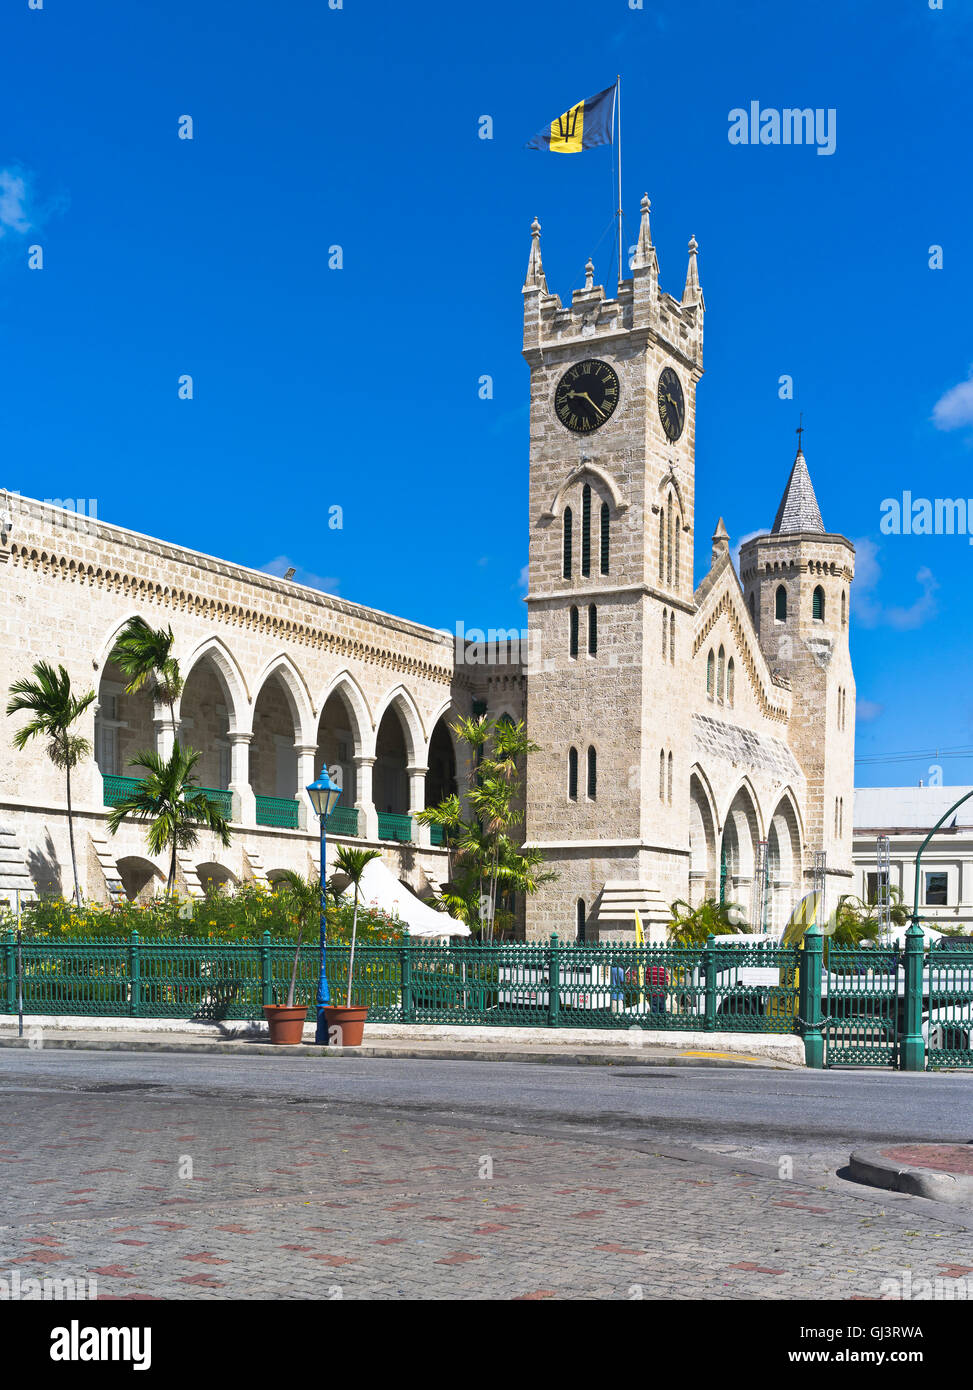 dh Bridgetown BARBADOS CARIBBEAN Parlament Gebäude Uhr Touristen Barbado Flagge Tower Colonial Stockfoto